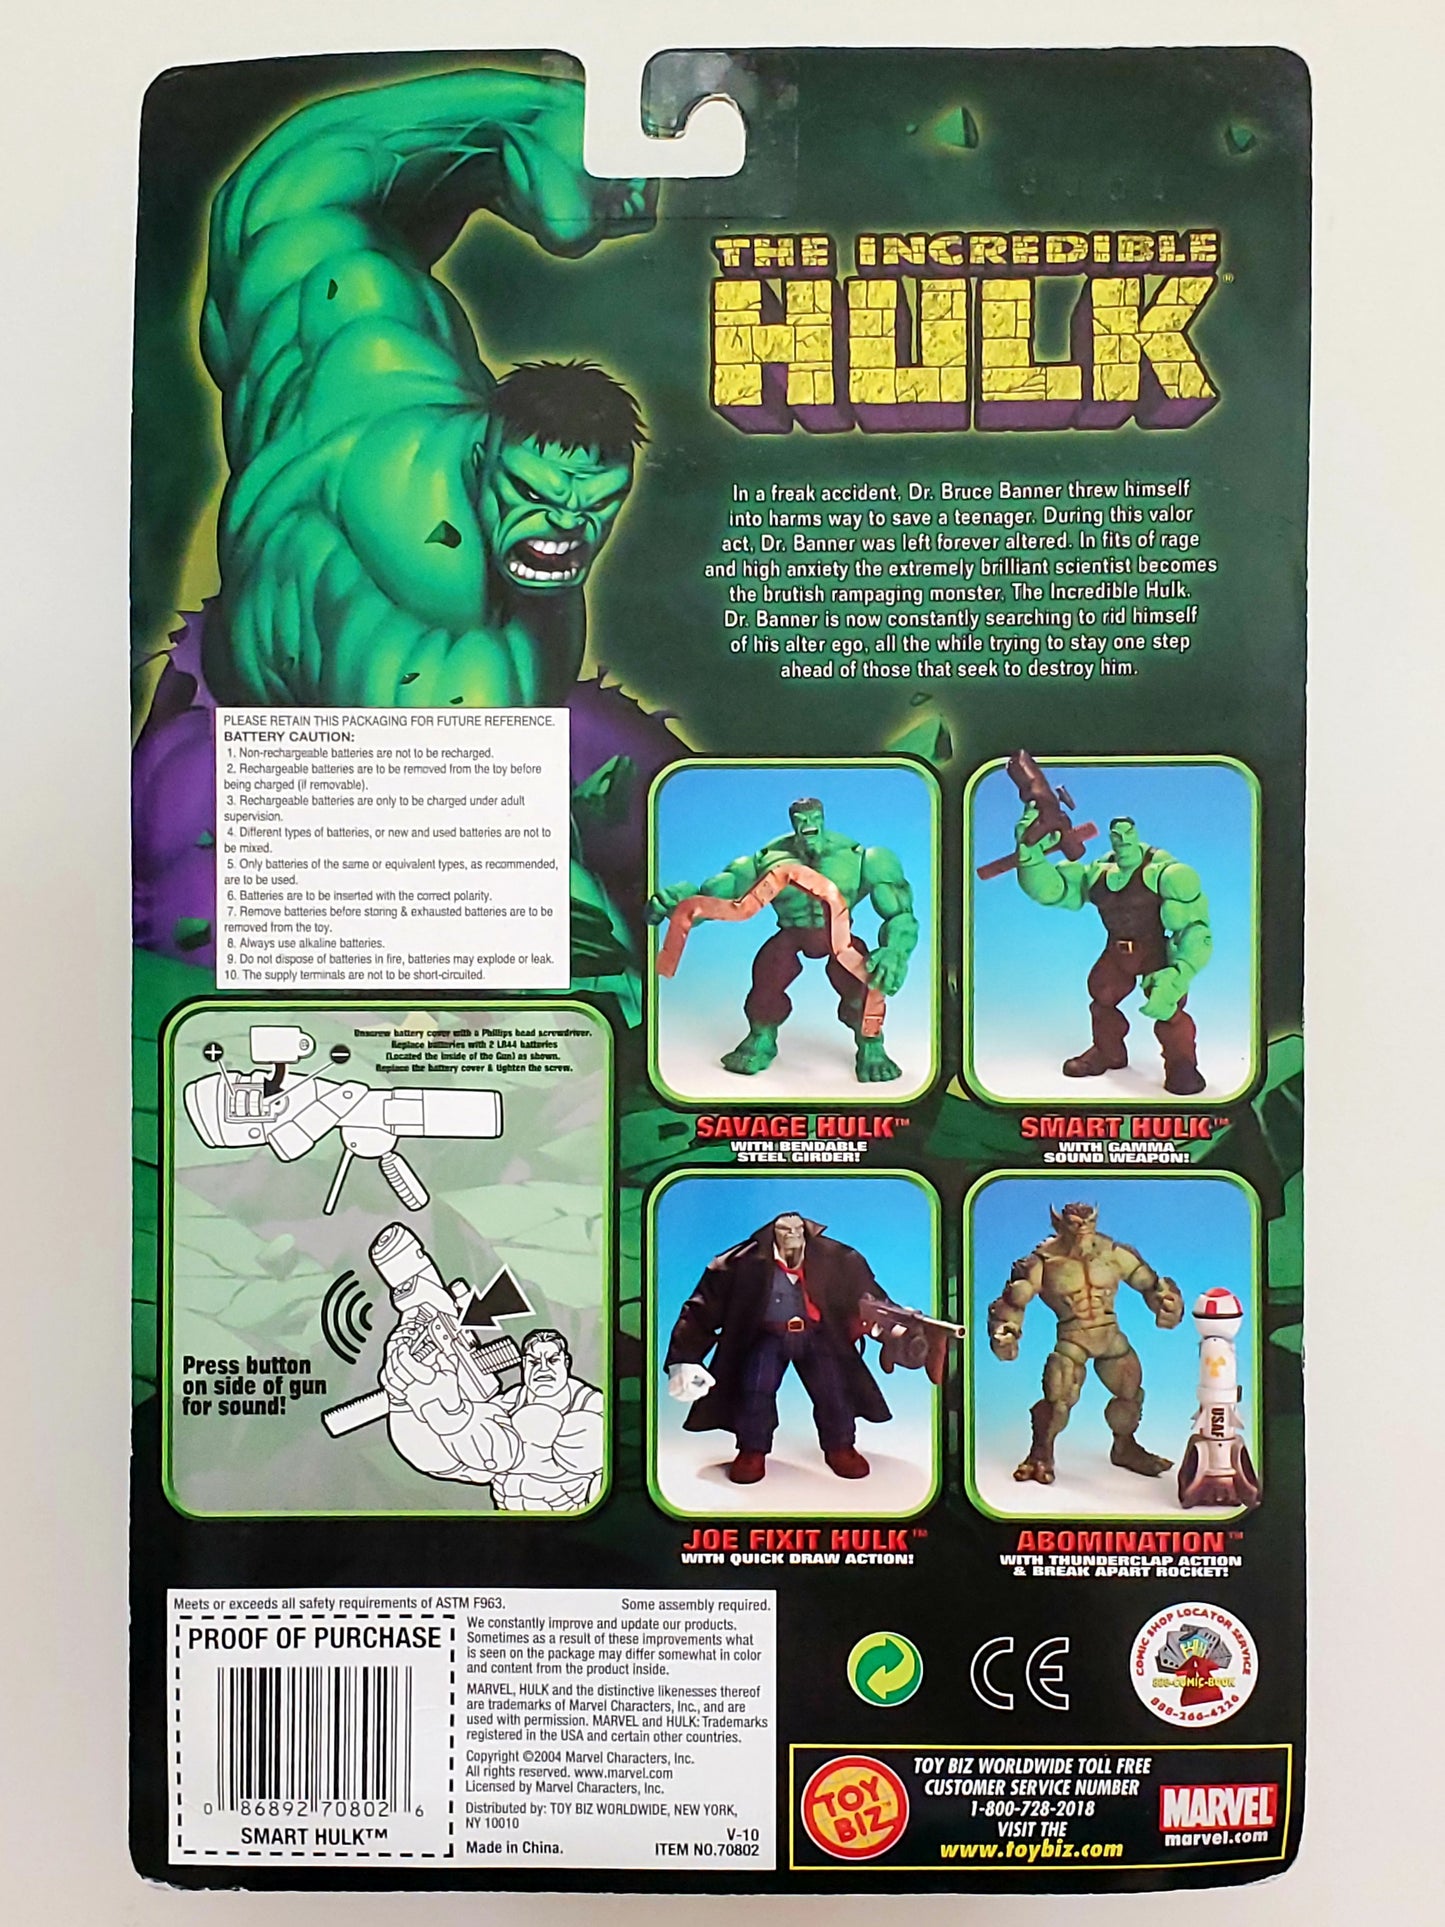 Smart Hulk from the Incredible Hulk